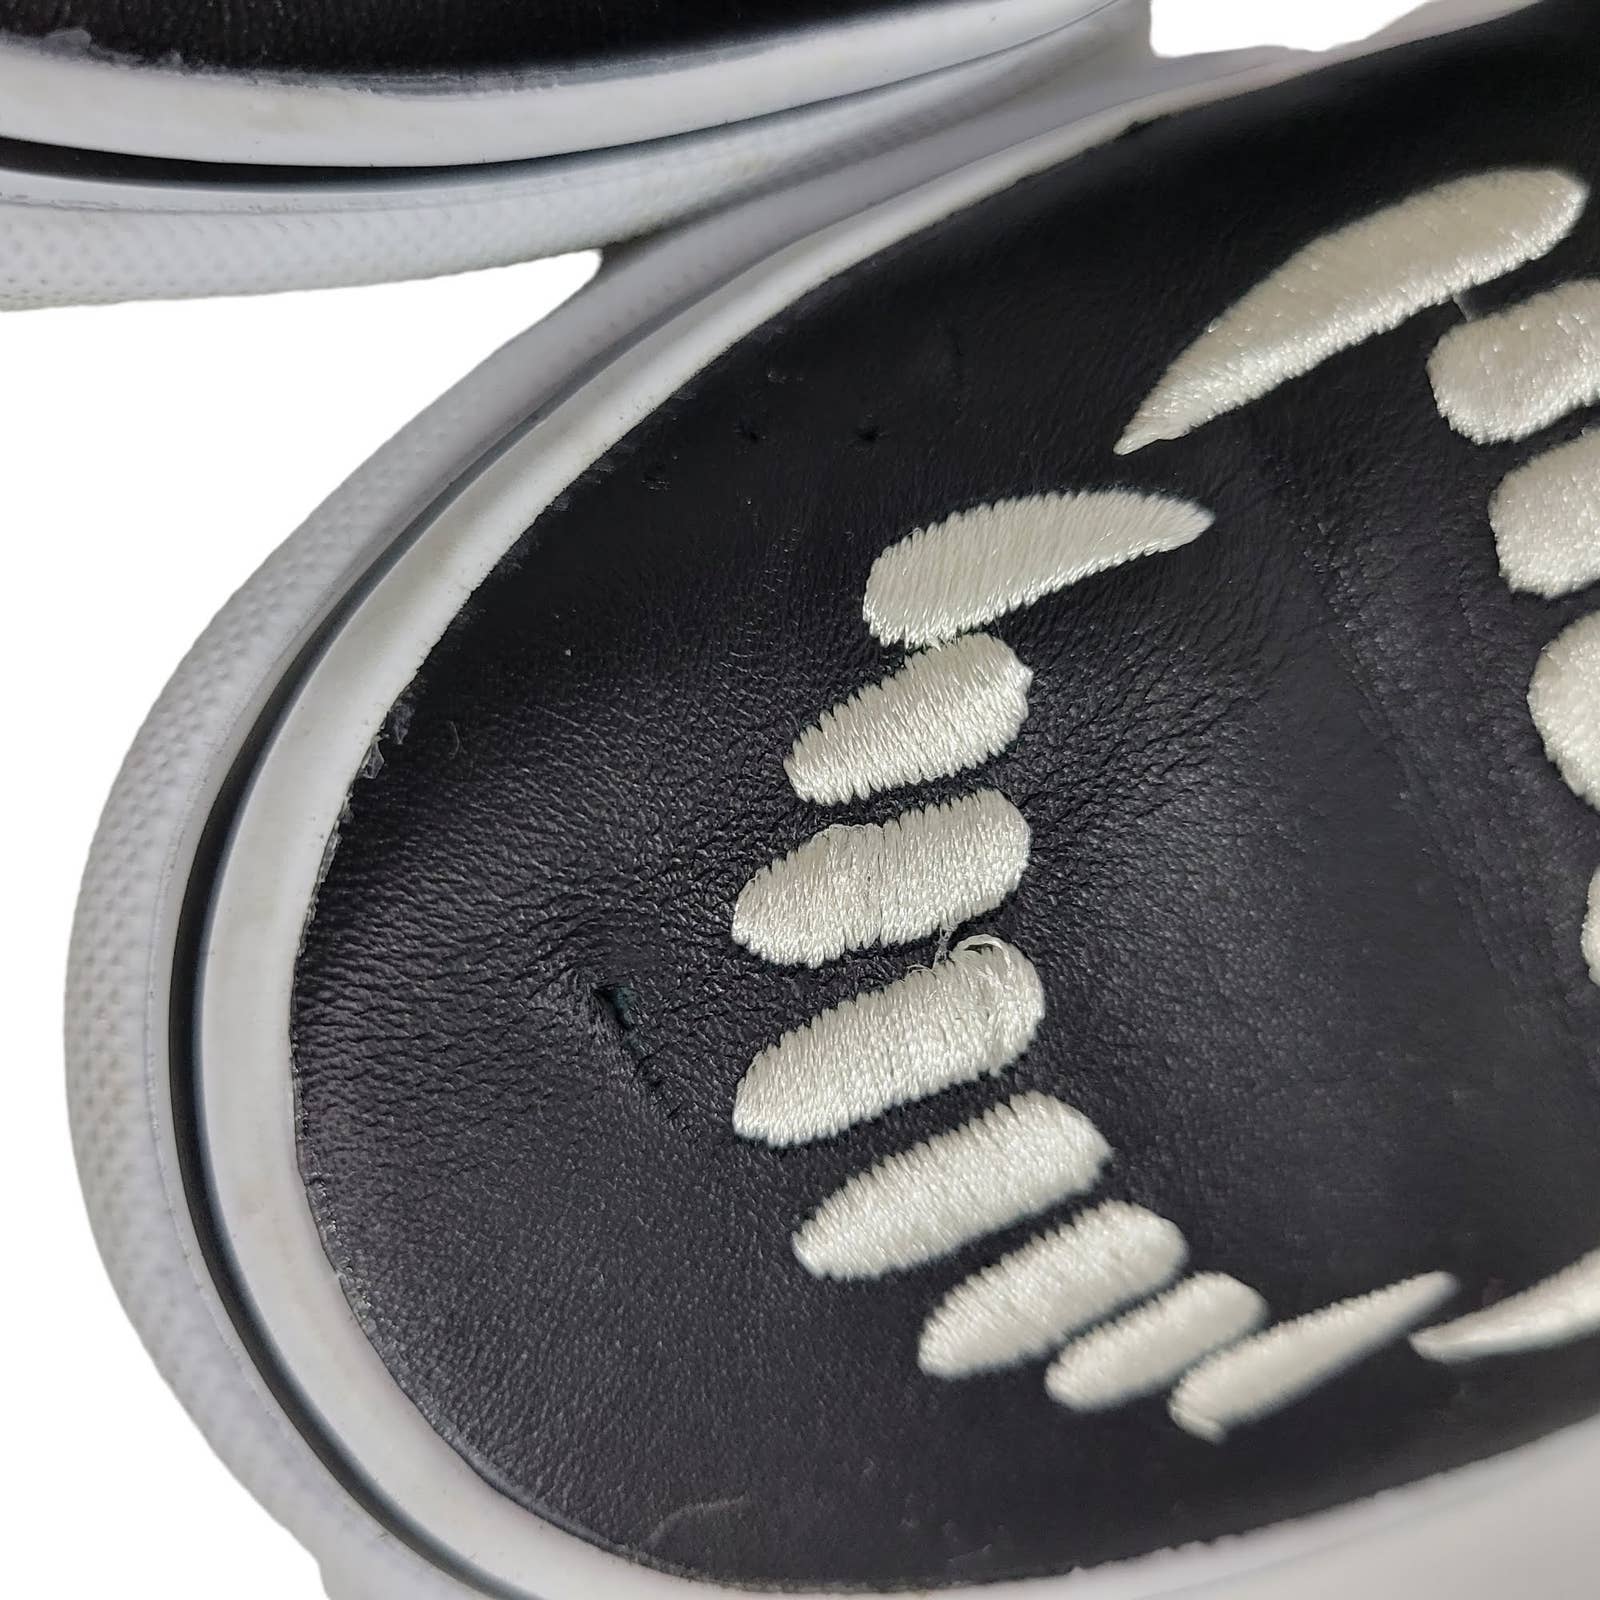 Vans Fangs Sneaker Slip On Black Leather Embroidered Unisex Size 8.5 Women 7 Men